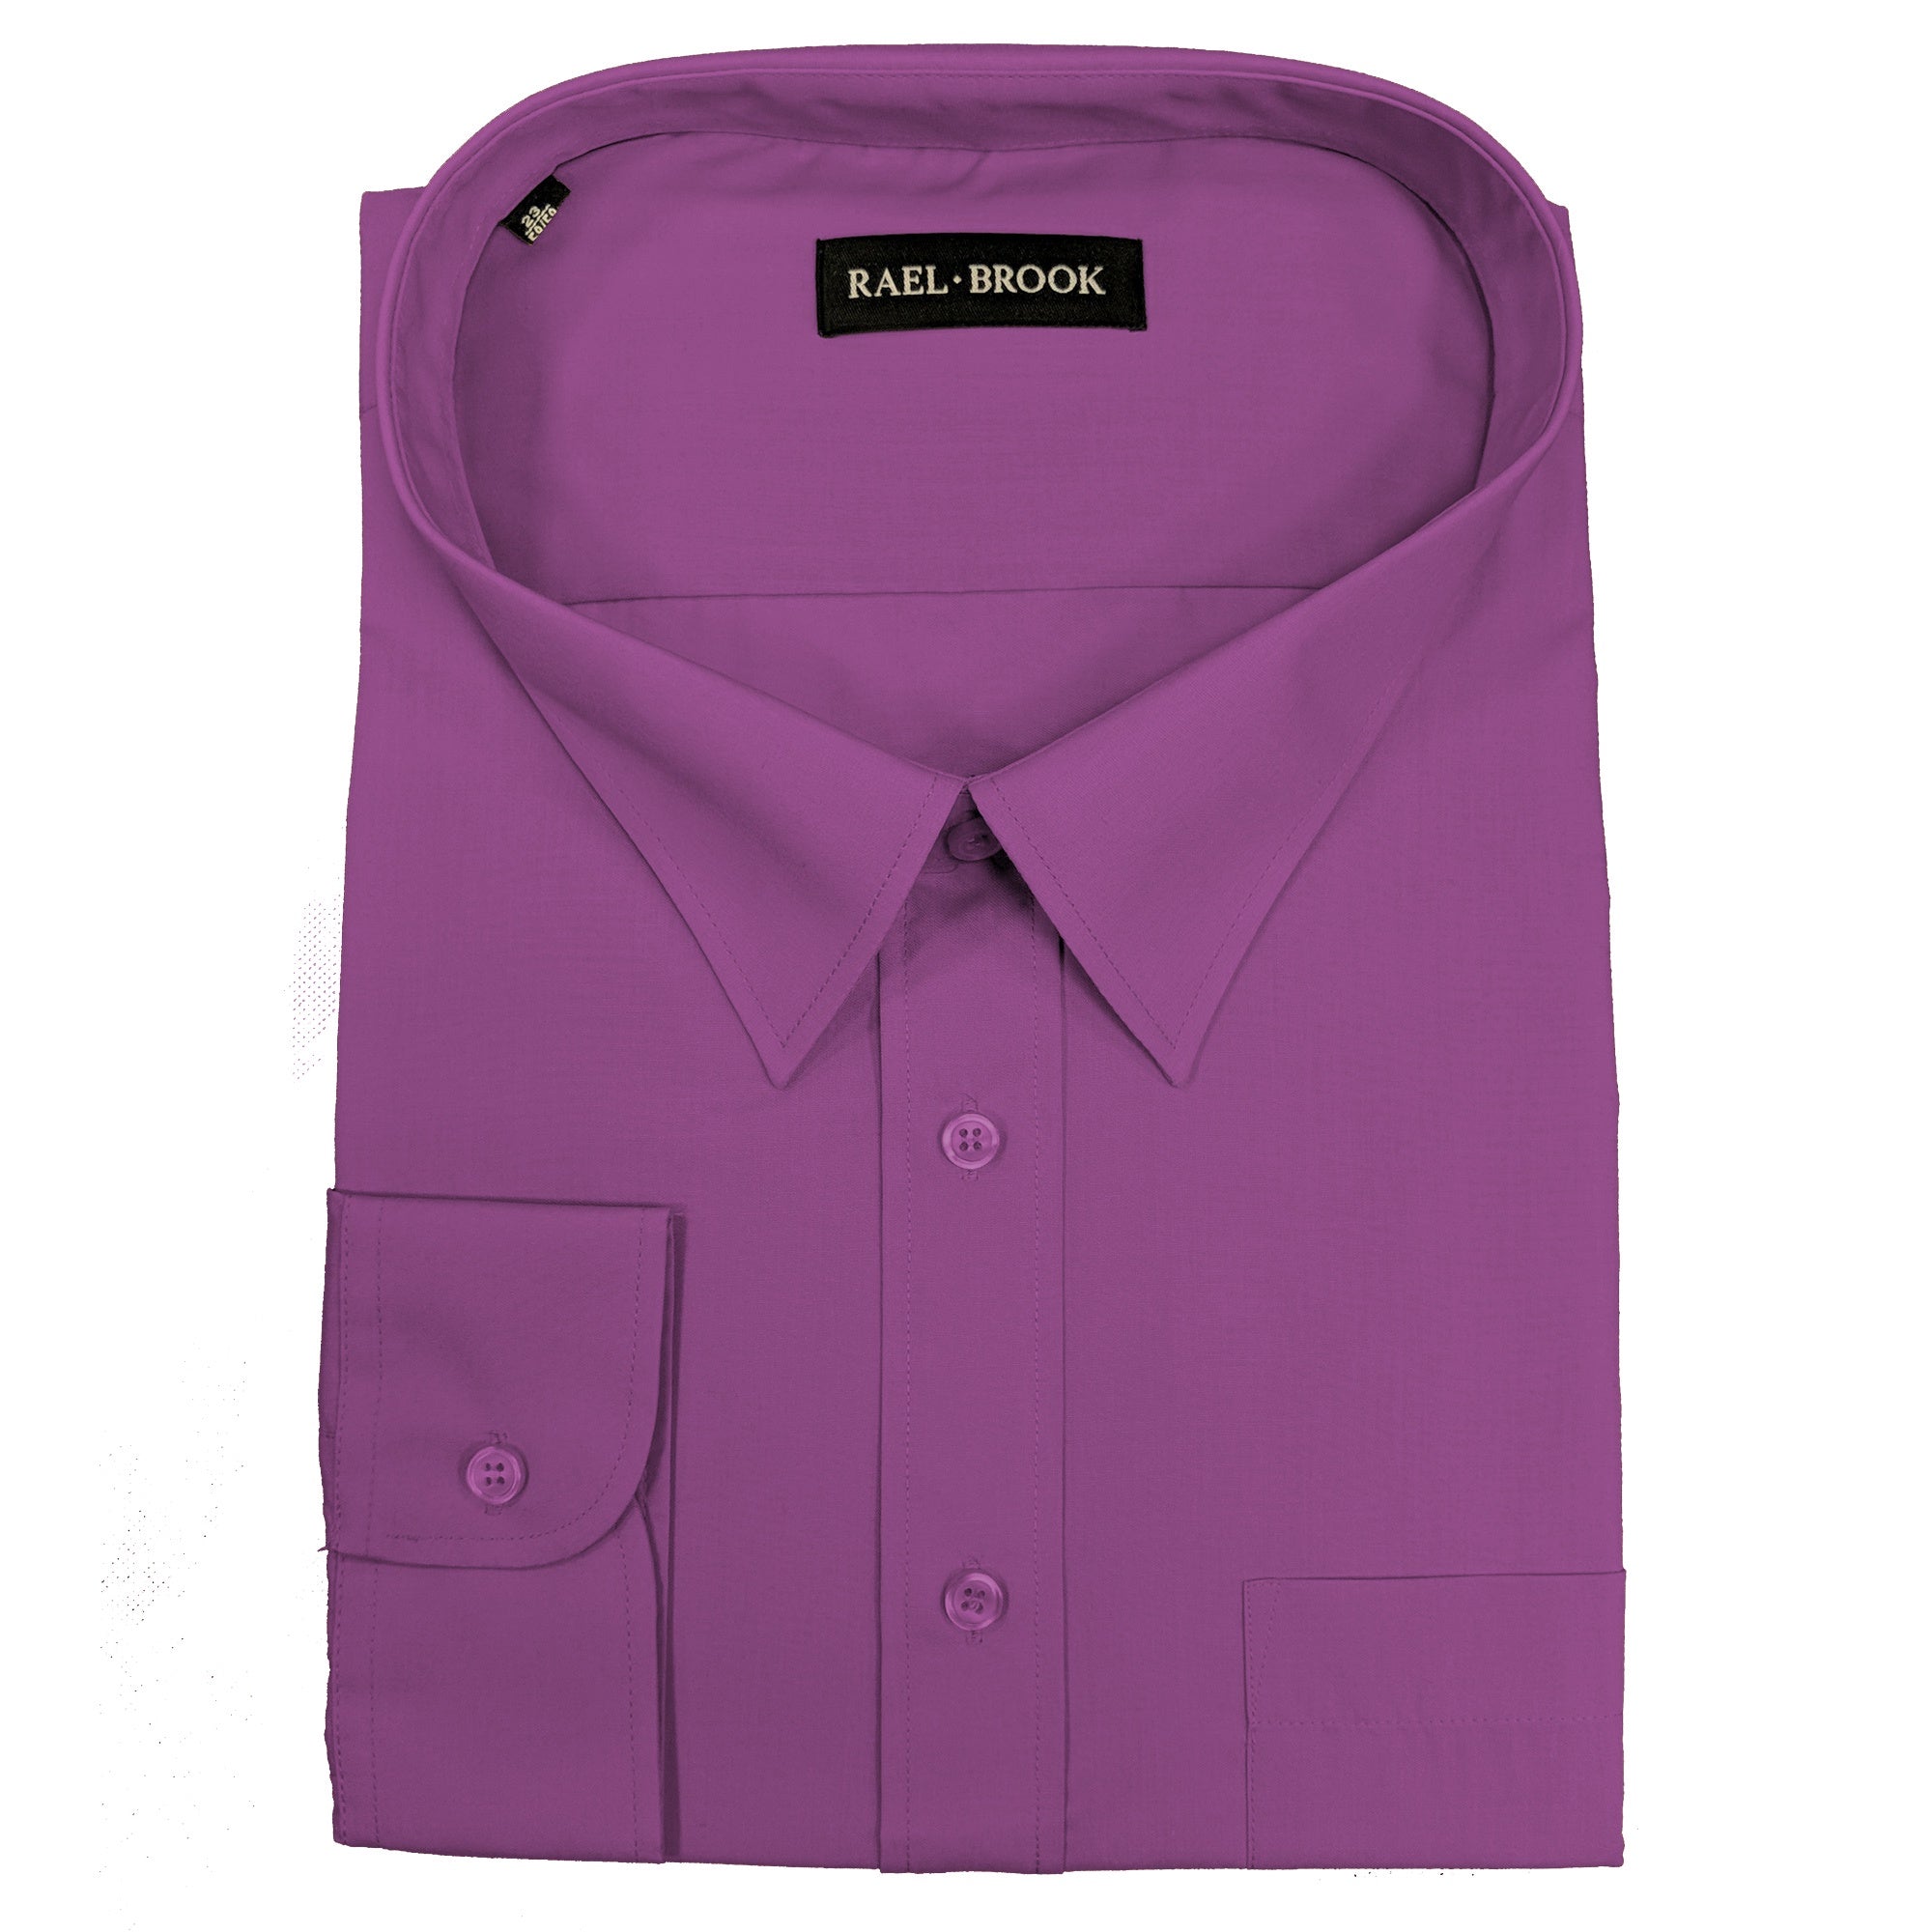 Rael Brook Plain L/S Shirt - 8079 - Violet 1